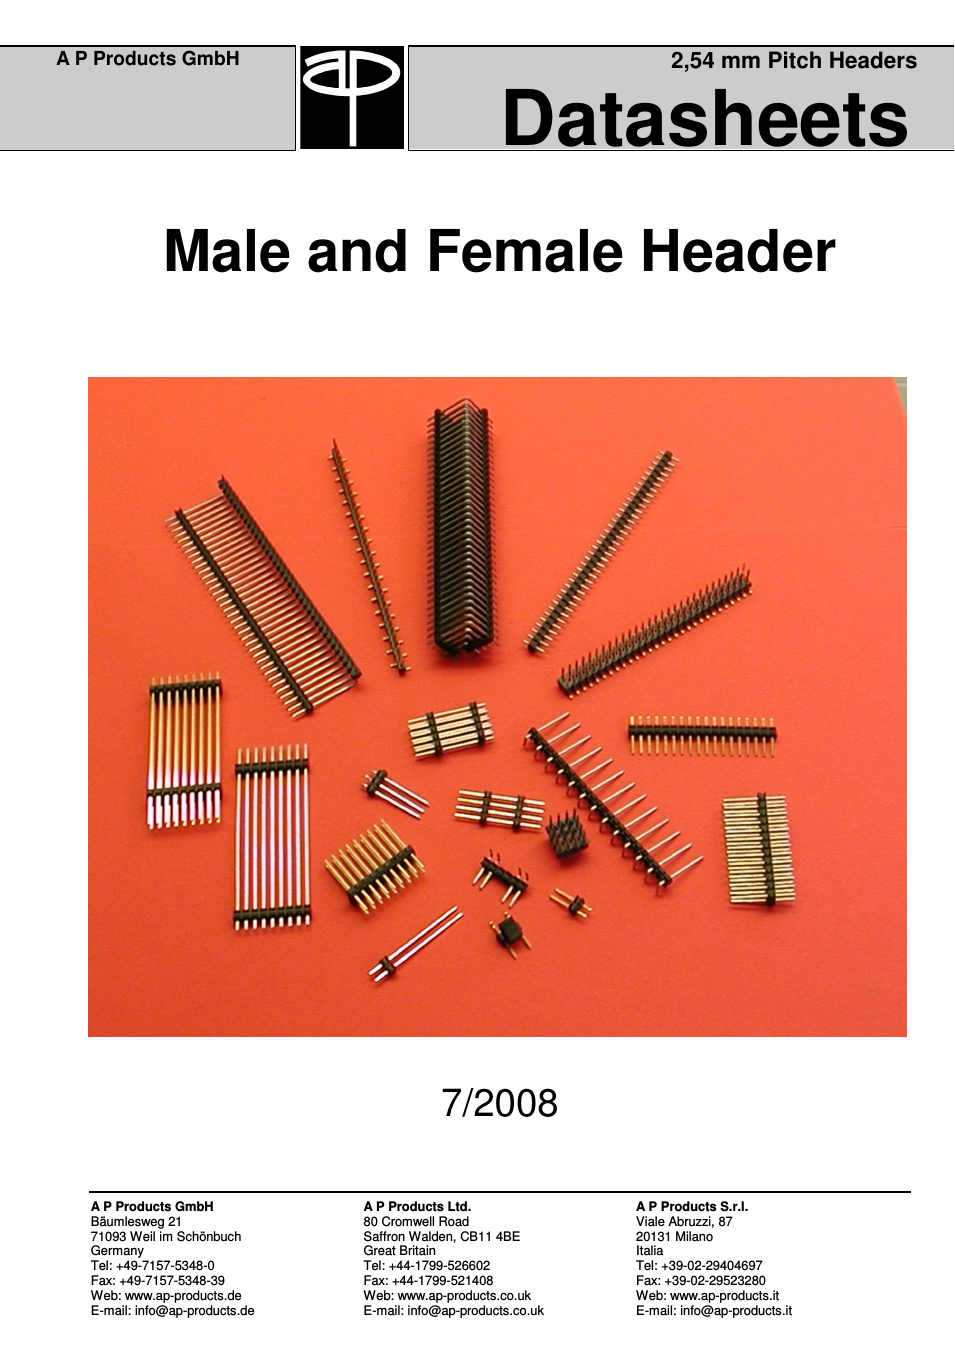 Male and Female Header